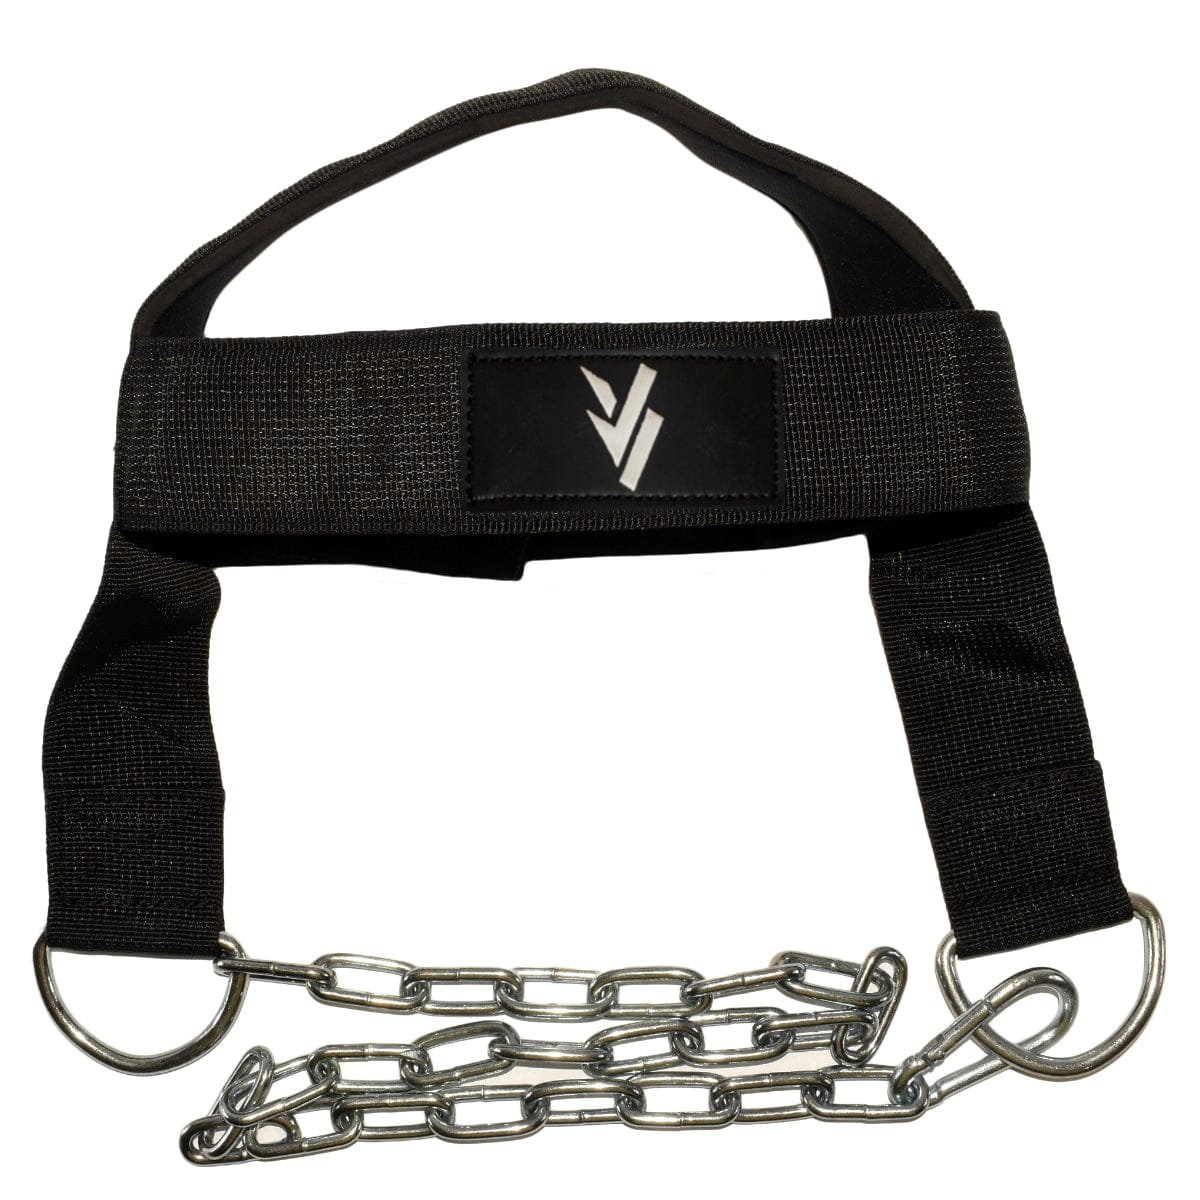 Head Harness Dipping Neck Builder Belt Chain Weight Lifting Cotton Webbing & Cast Iron